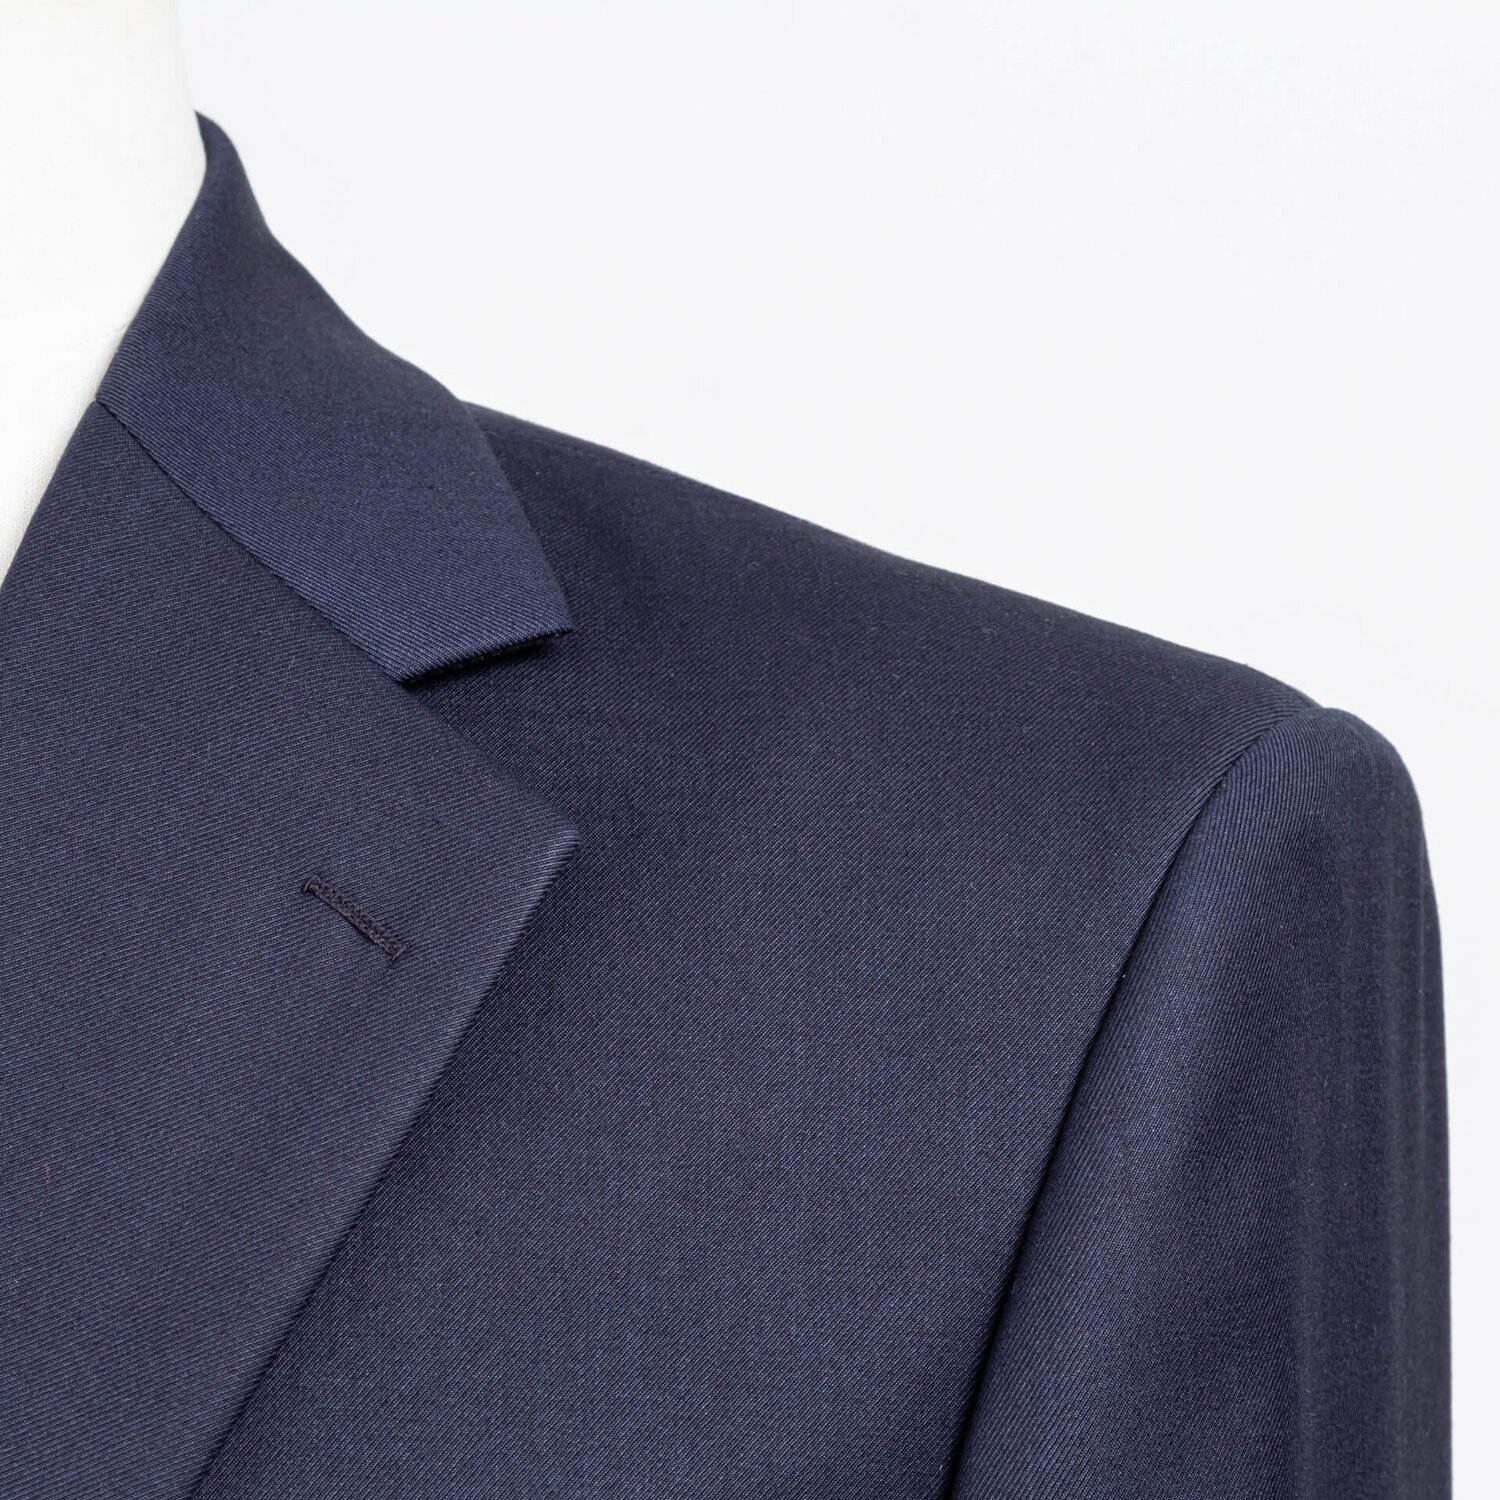 Dark Blue Suit with Grey Waistcoat